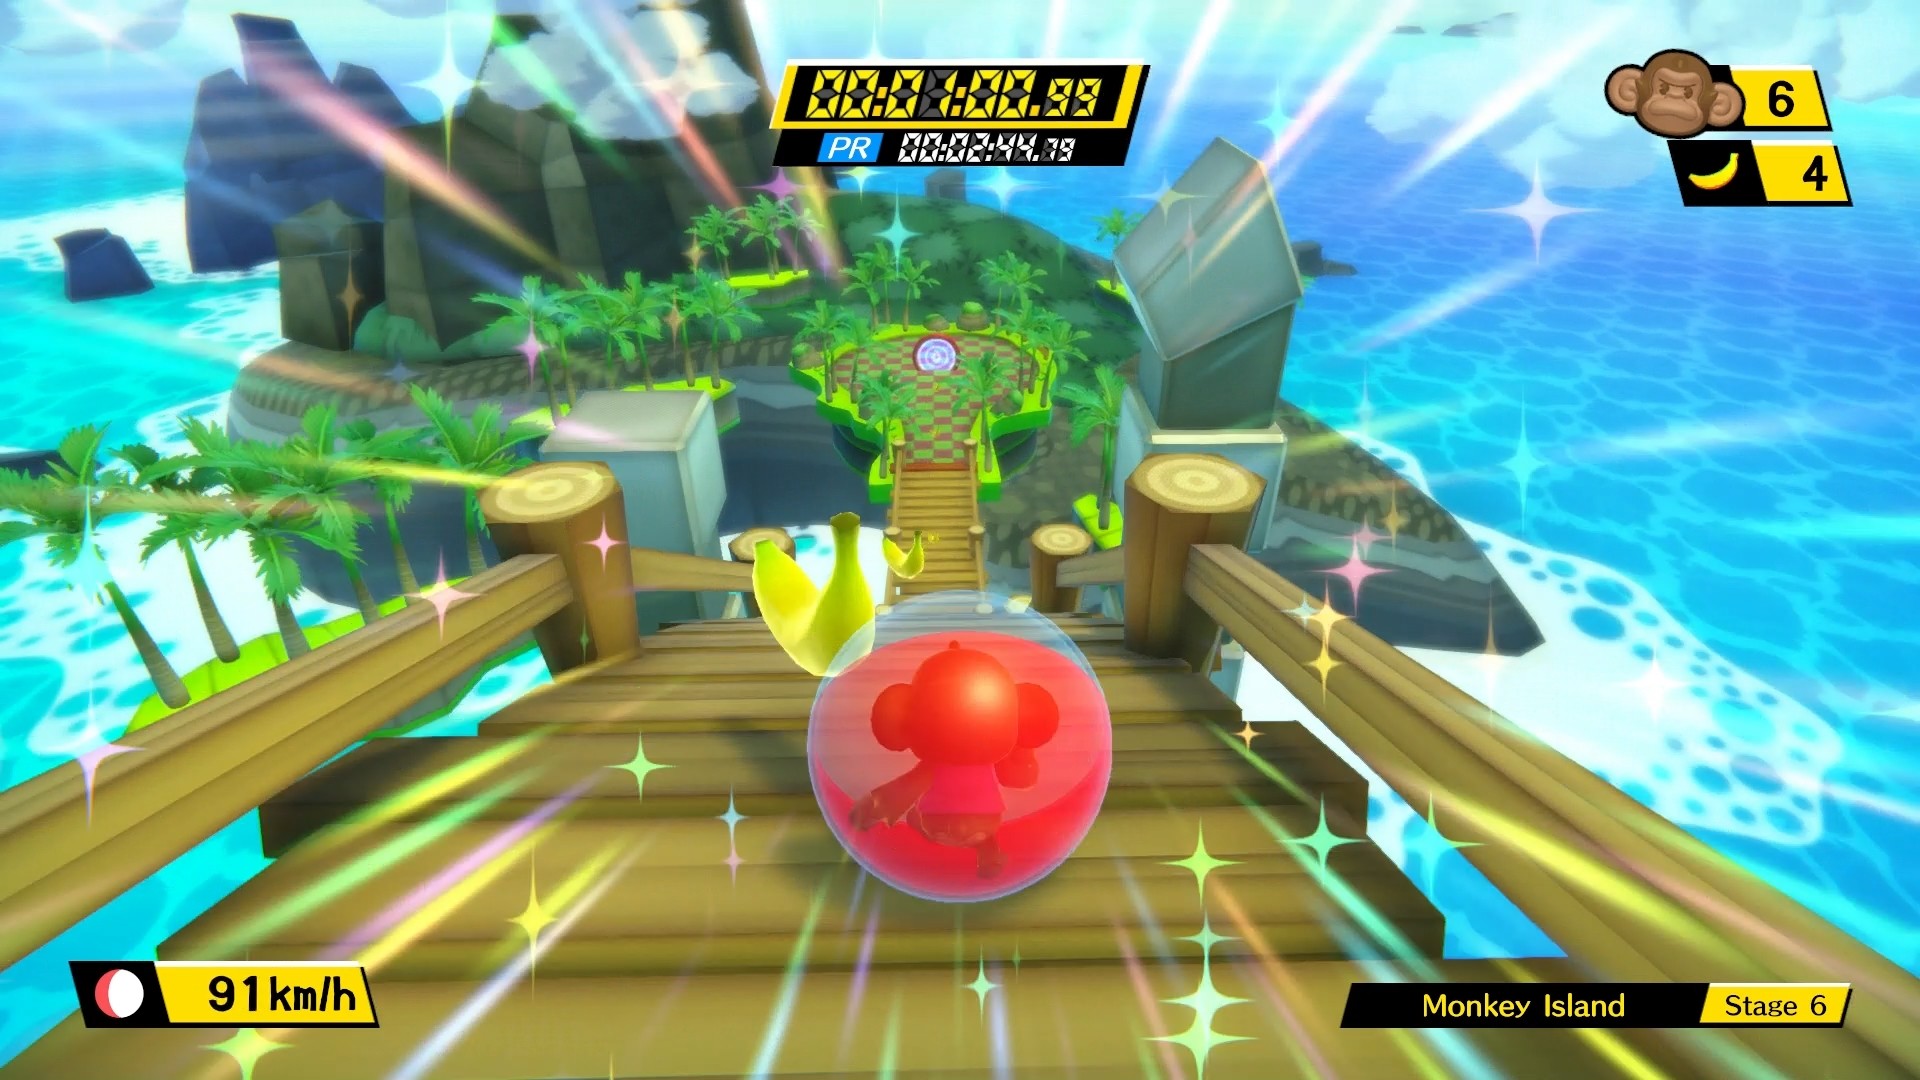 Super Monkey Ball: Banana Blitz HD screenshot